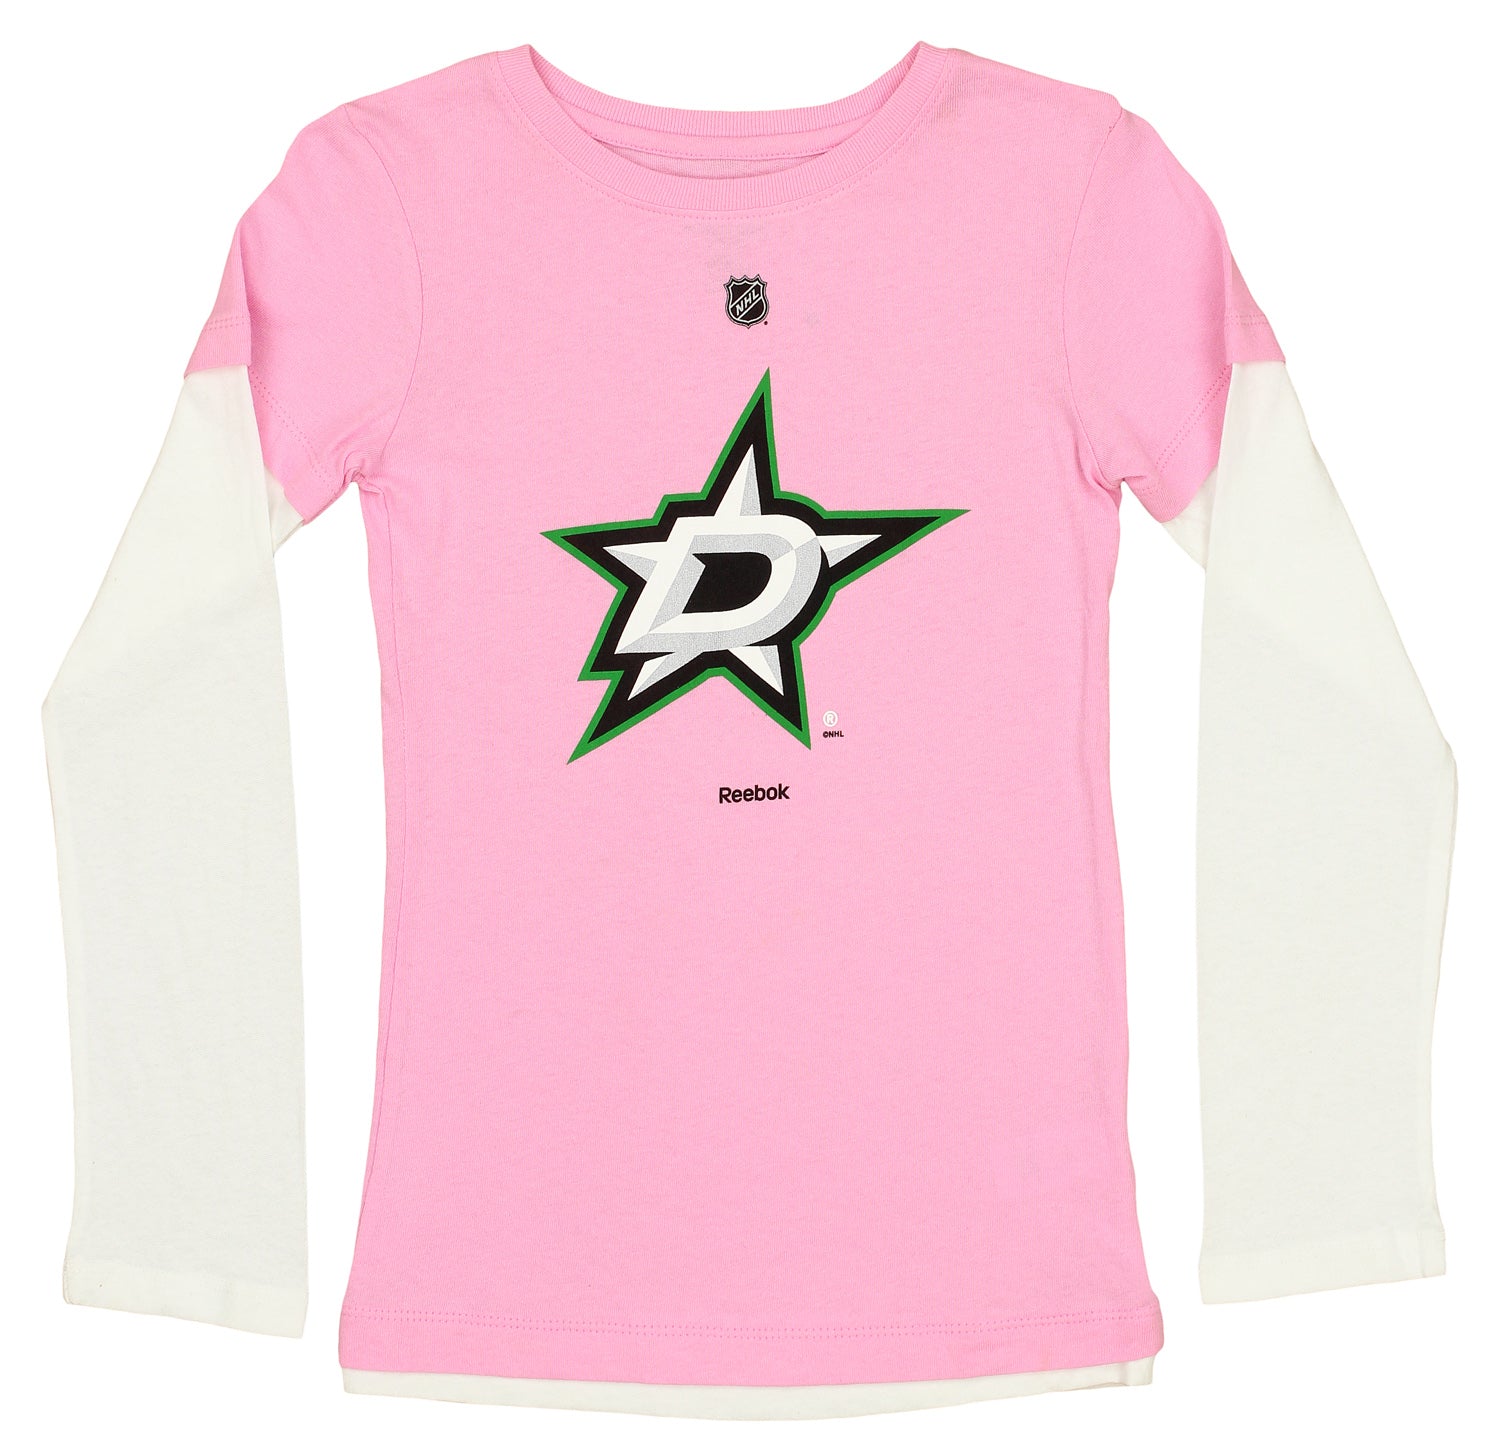 Reebok, Tops, Nashville Predators Reebok Pink Hocky Jersey Xs S